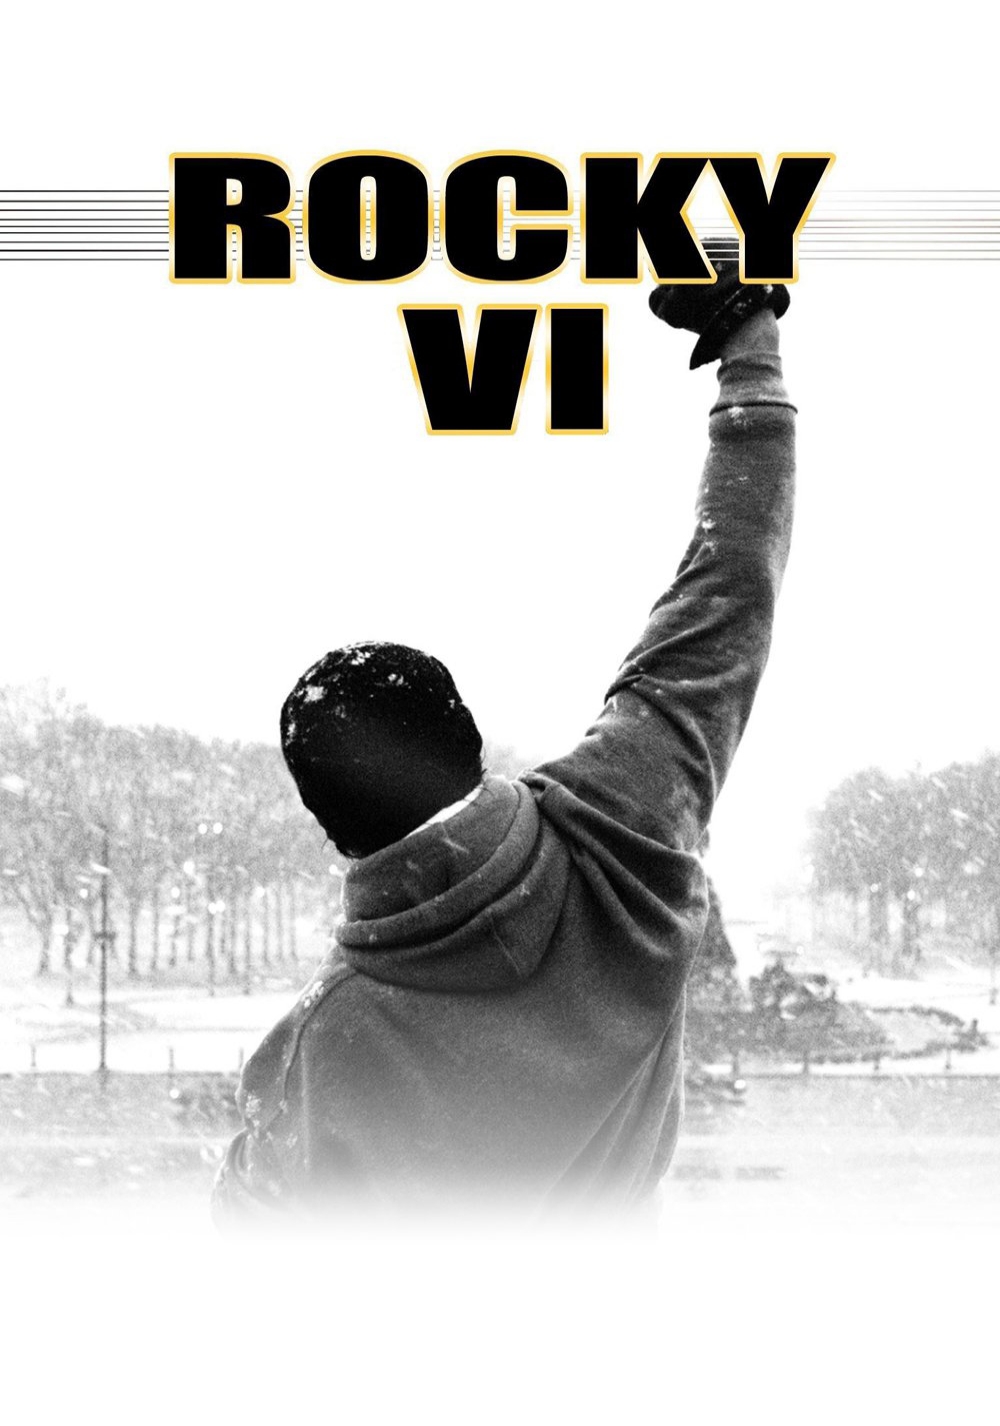 rocky balboa movie posters